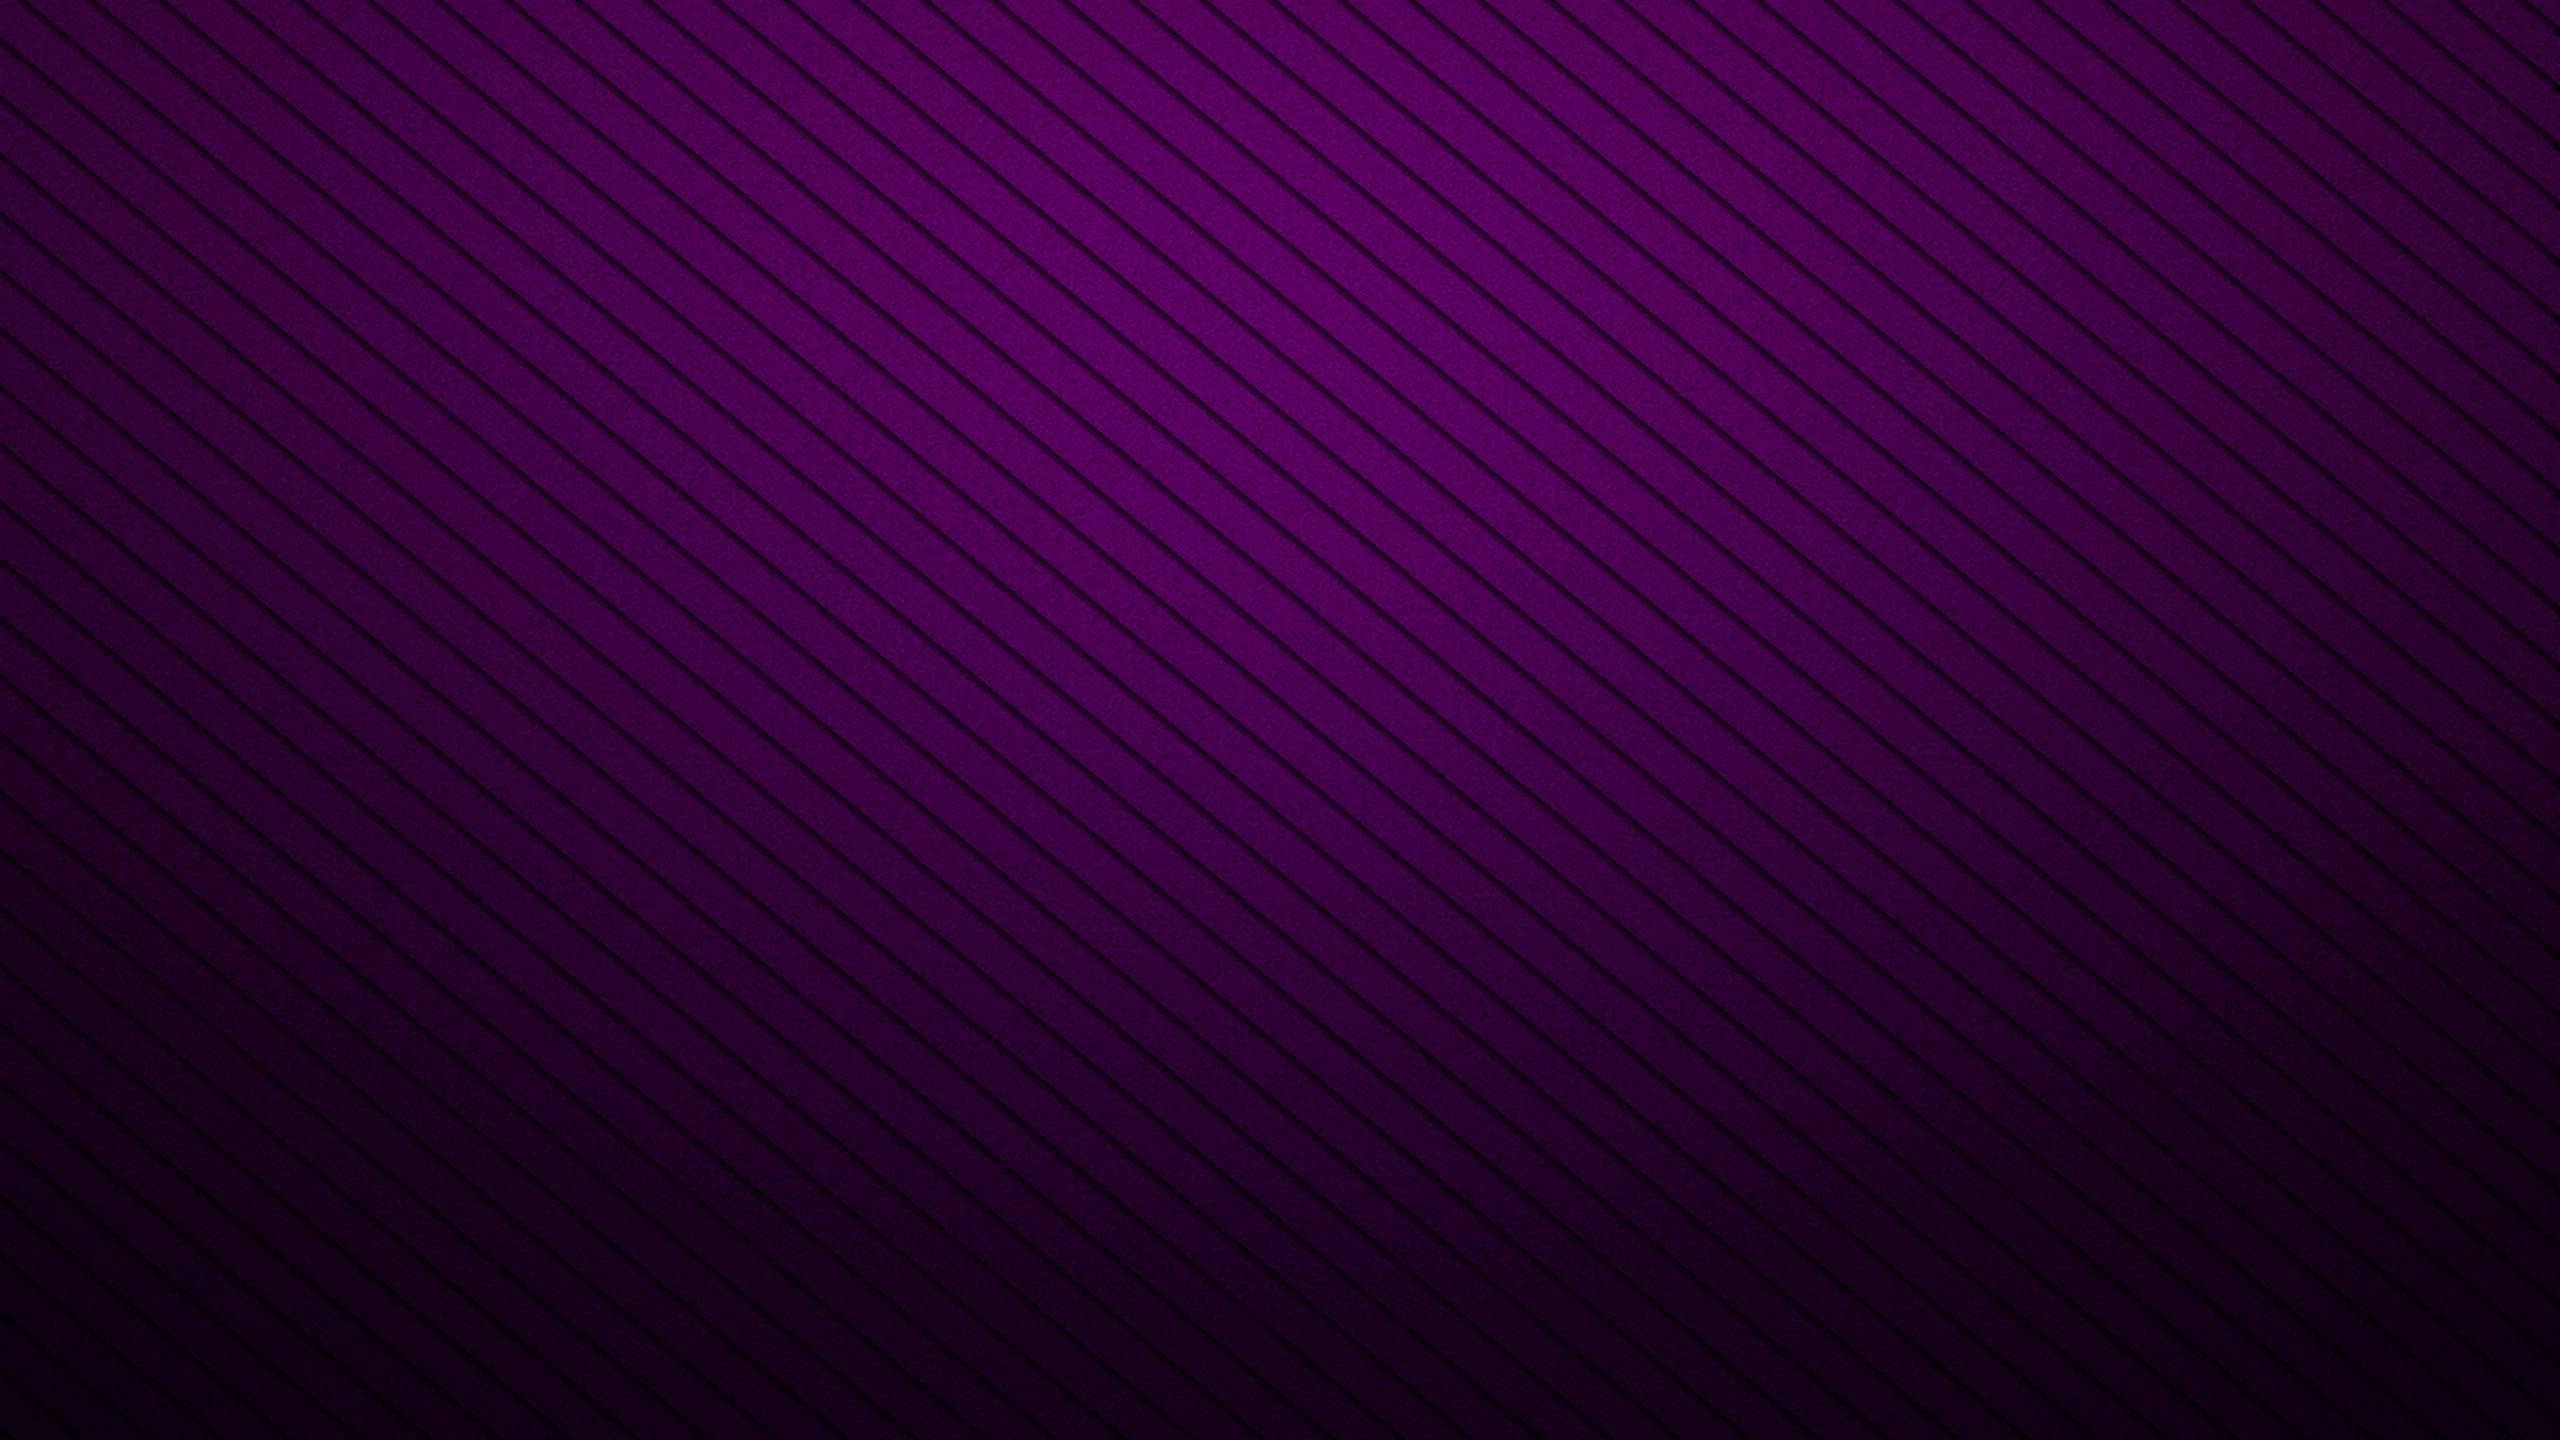 Free Purple Wallpaper Downloads, [900+] Purple Wallpapers for FREE |  